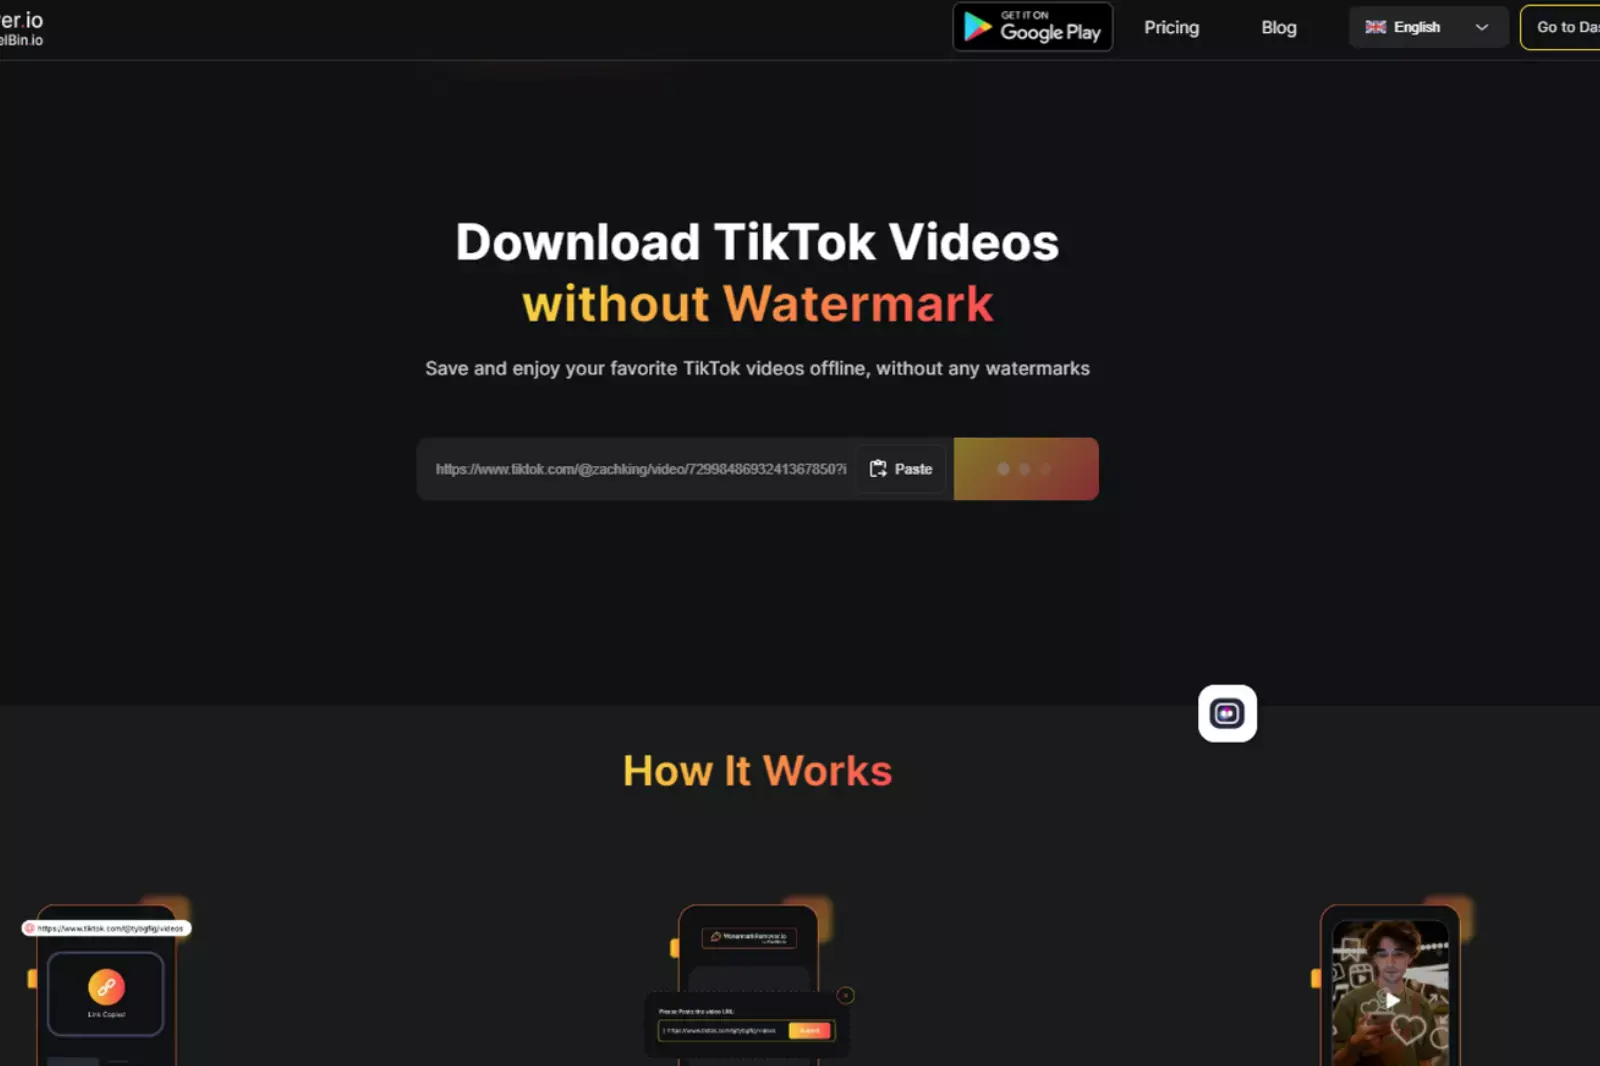 Tiktok Watermark Remover to work its magic